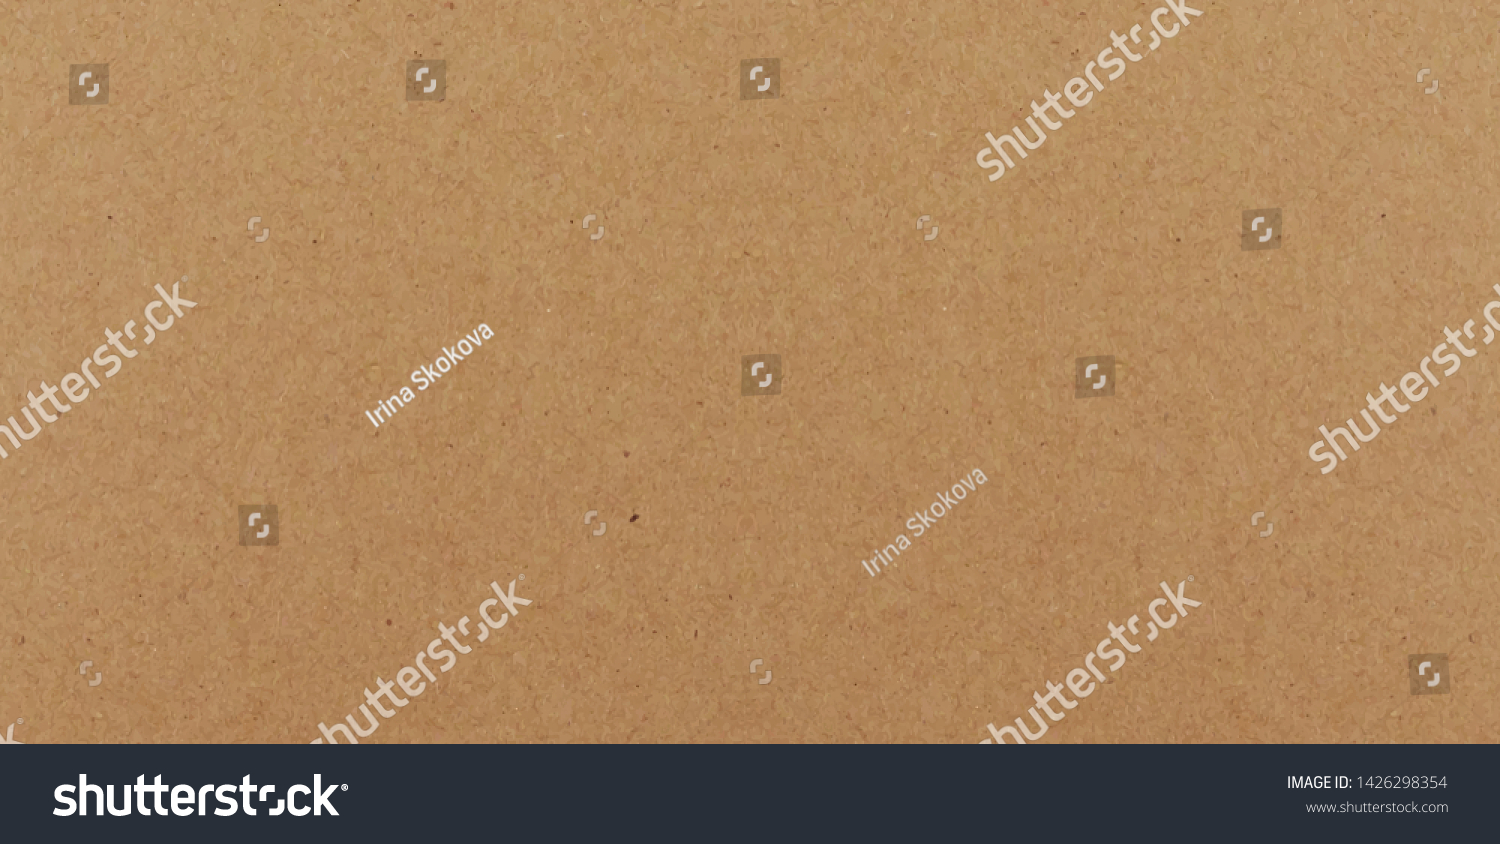 Vector seamless texture of kraft paper background #1426298354